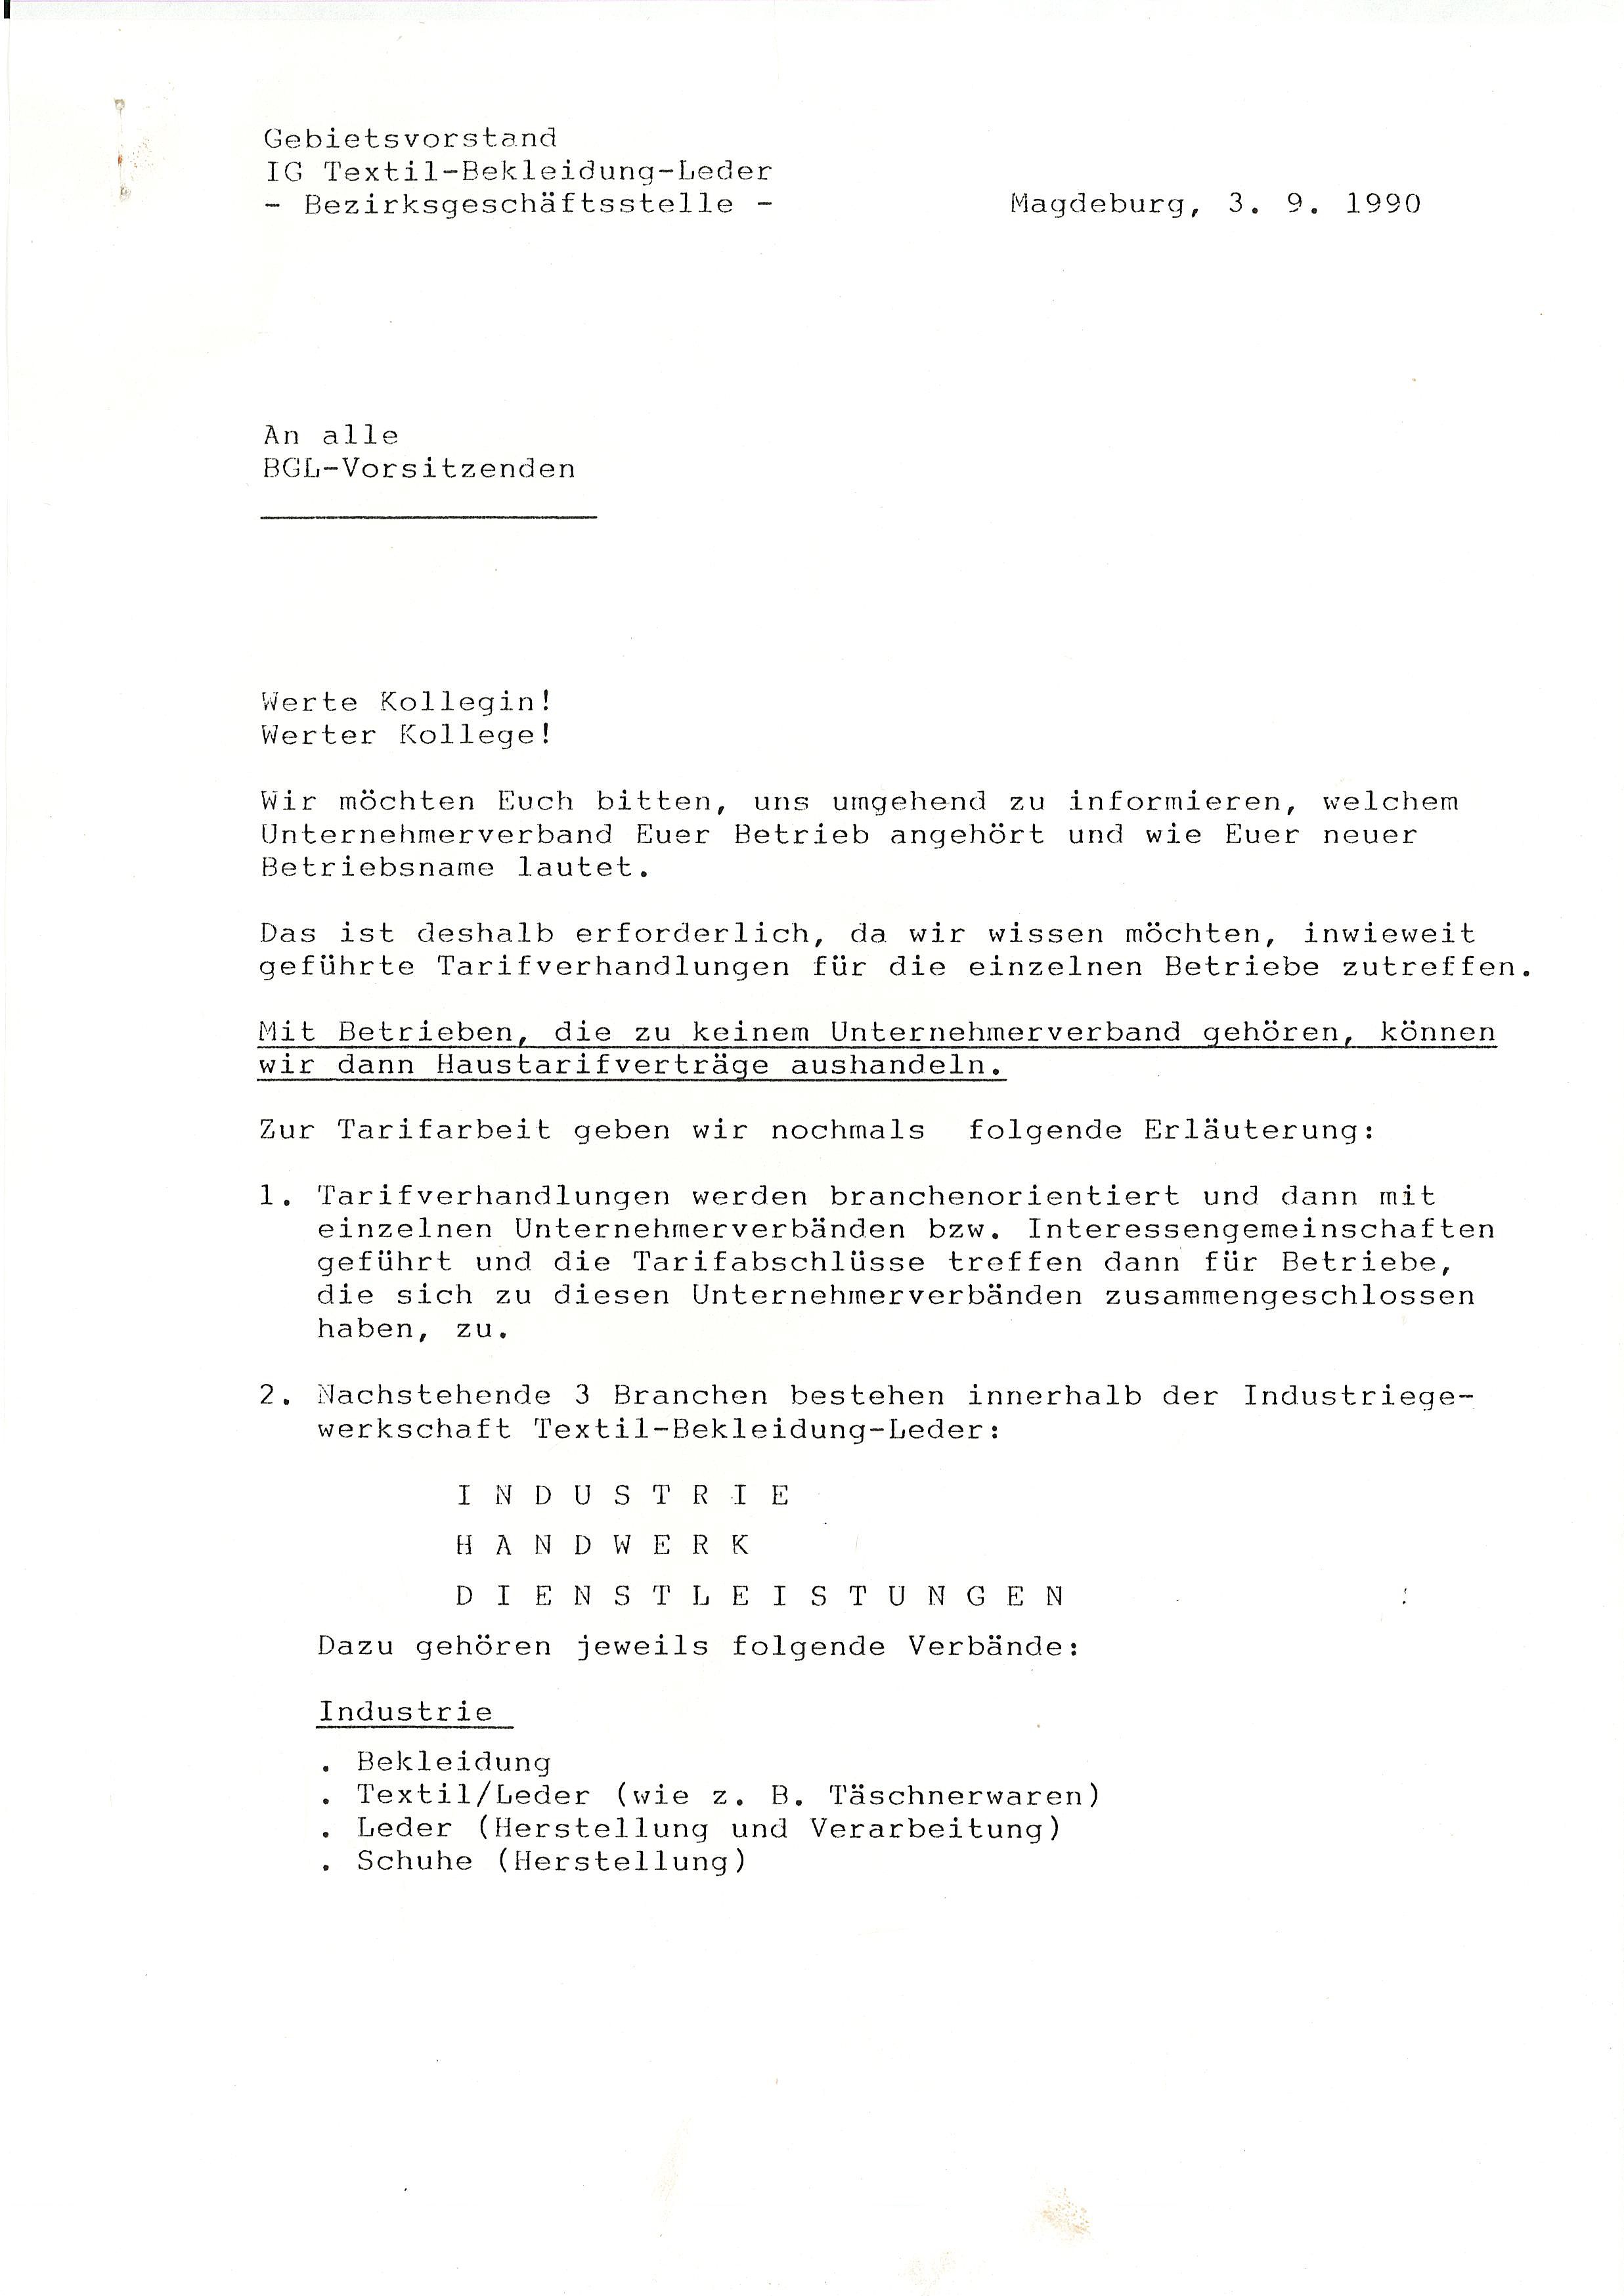 Info BGL-Vorsitzenden - IG Textil-Bekleidung-Leder - 03.09.1990 (Museum Wolmirstedt RR-F)